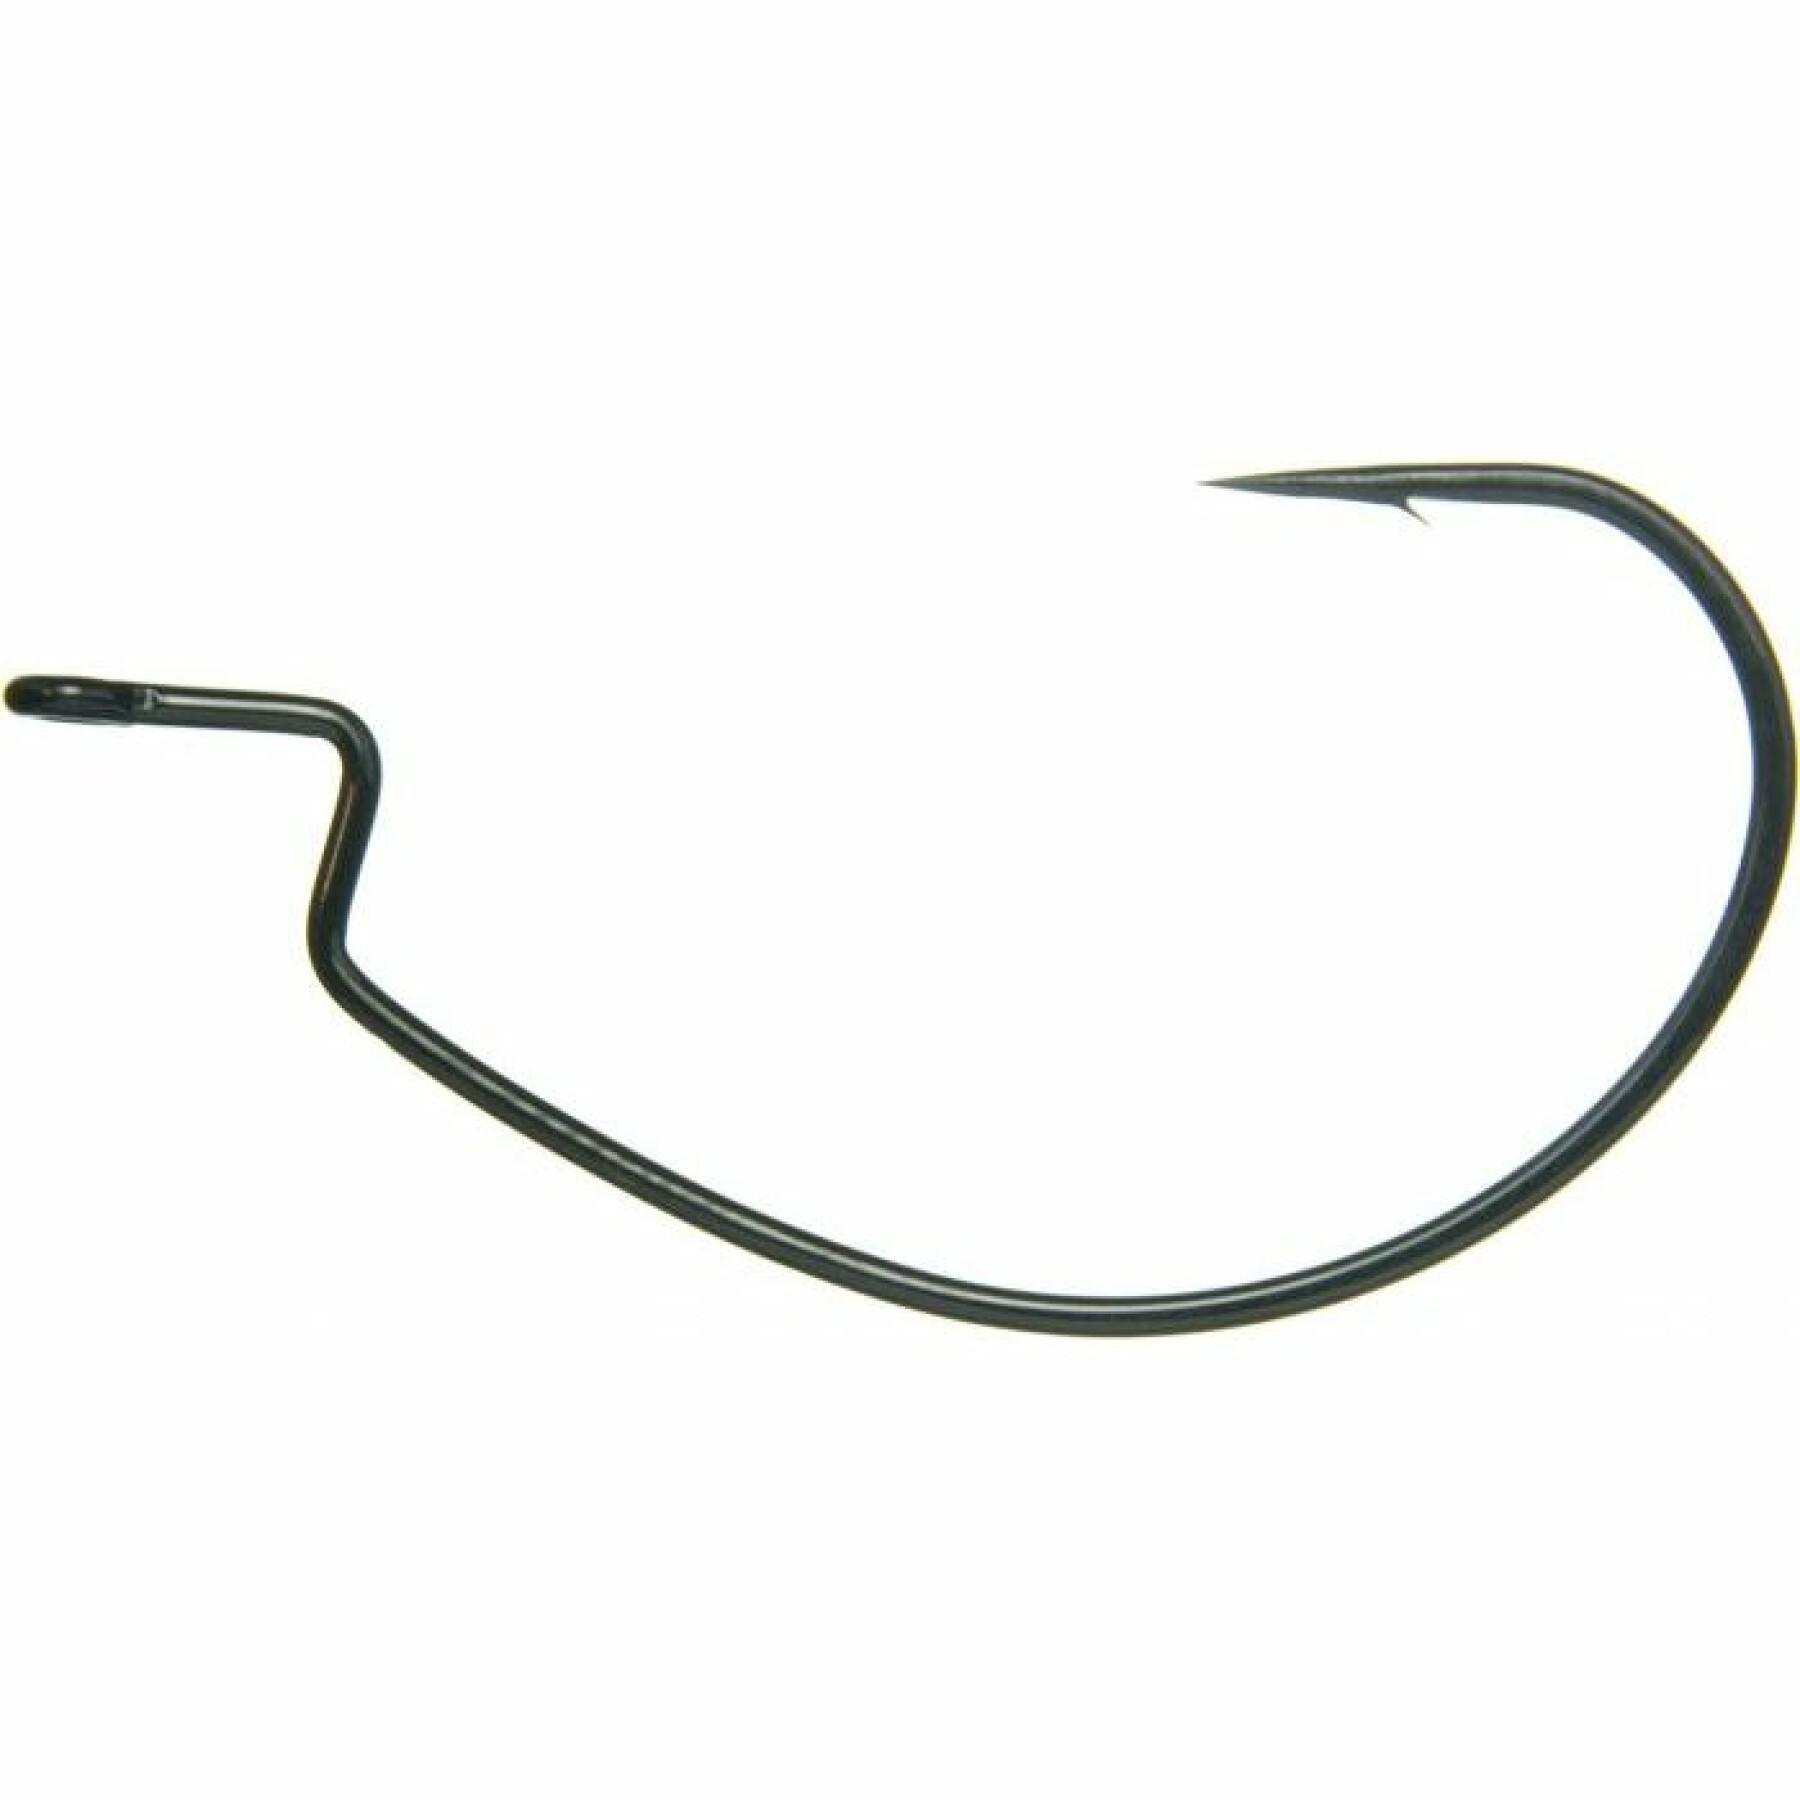 Hooks Decoy worm 26 (x2)